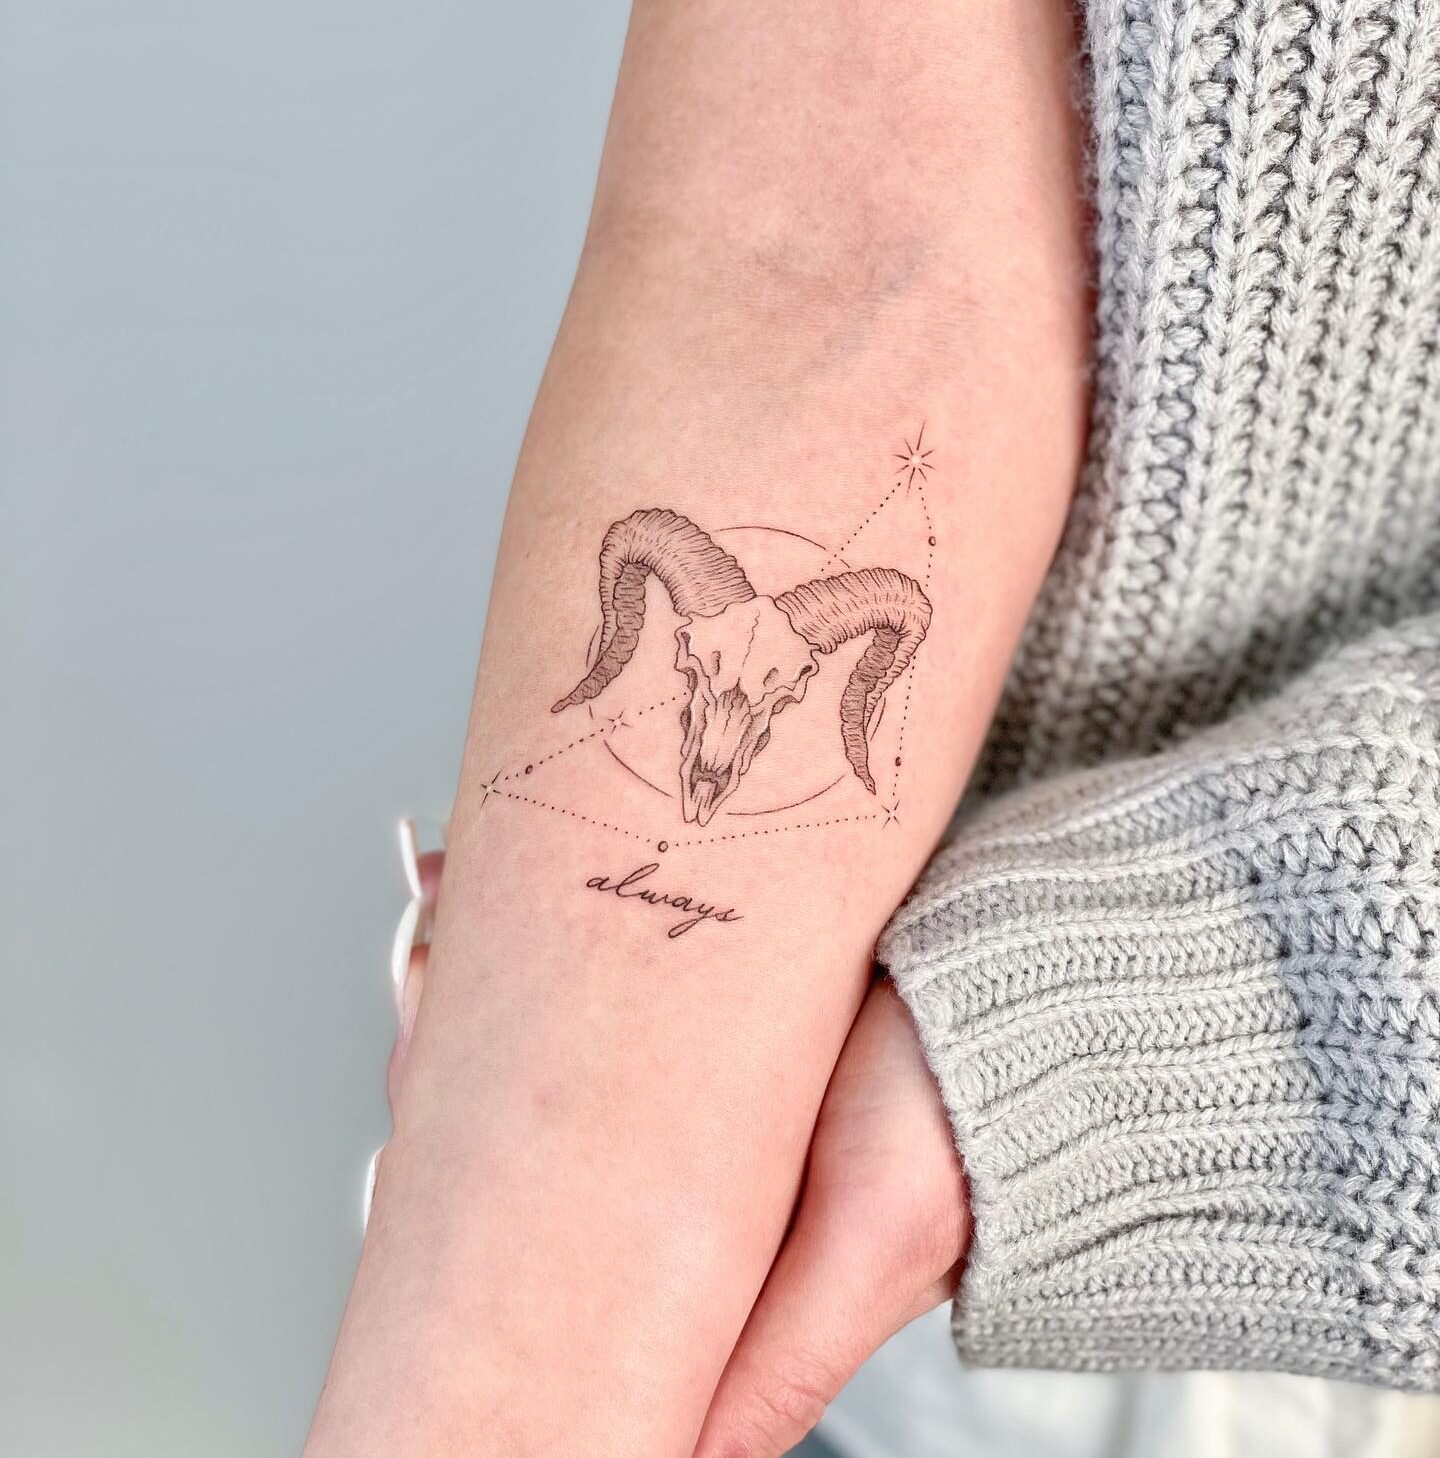 Single needle ram skull and Capricornus constellation tattoo on the inner forearm